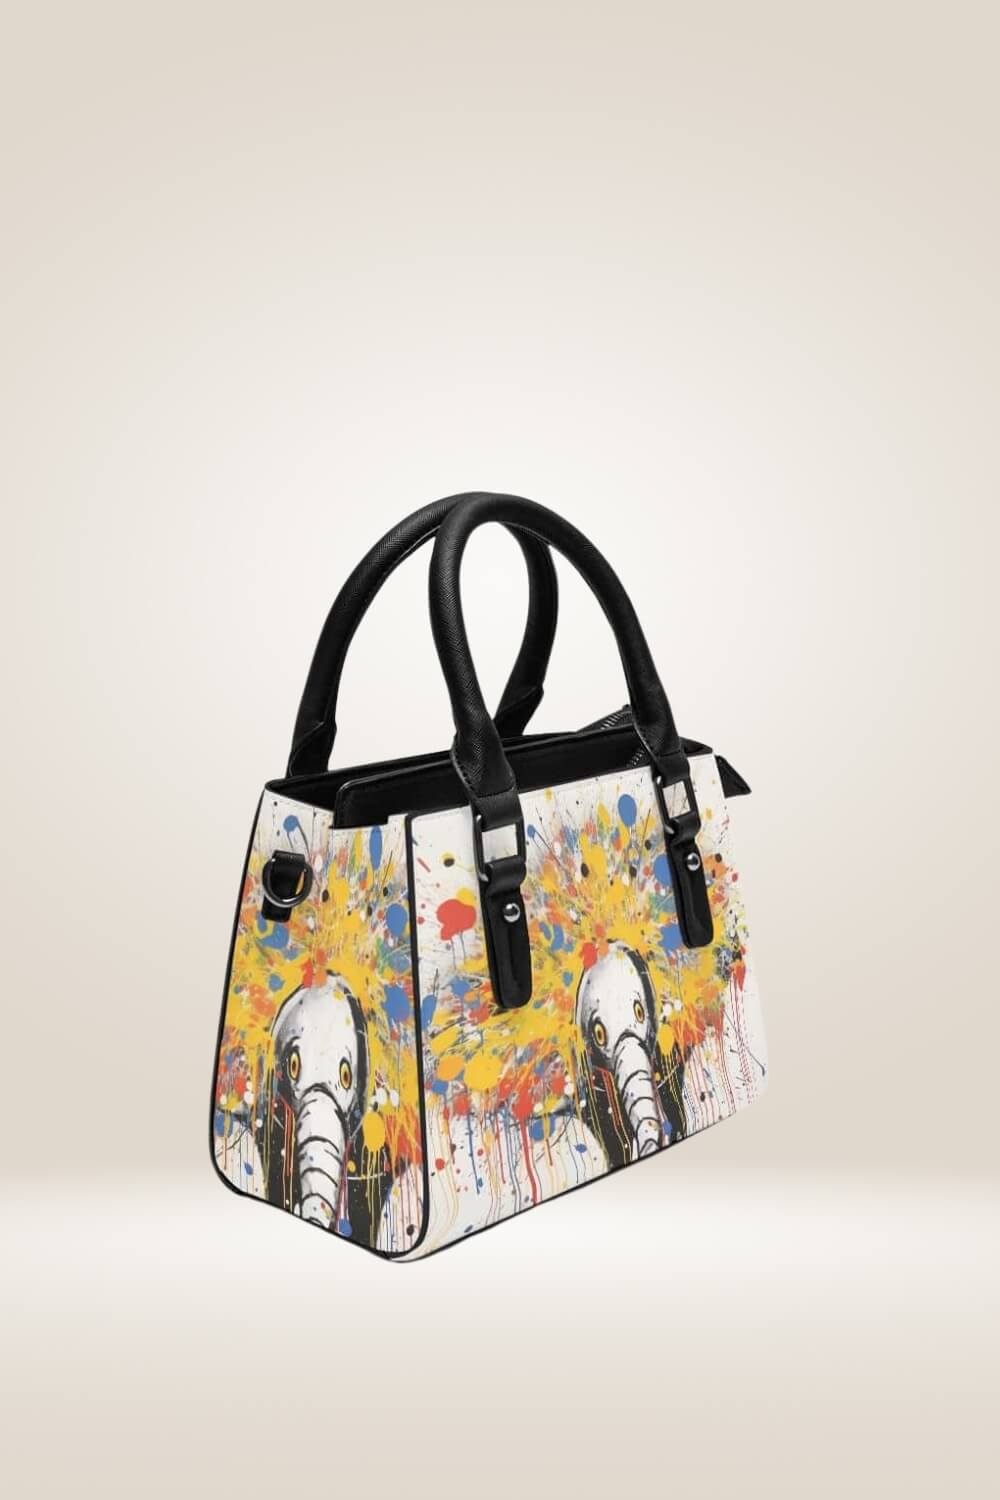 Spray paint Elephant White Satchel Bag - TGC Boutique - Satchel Handbag